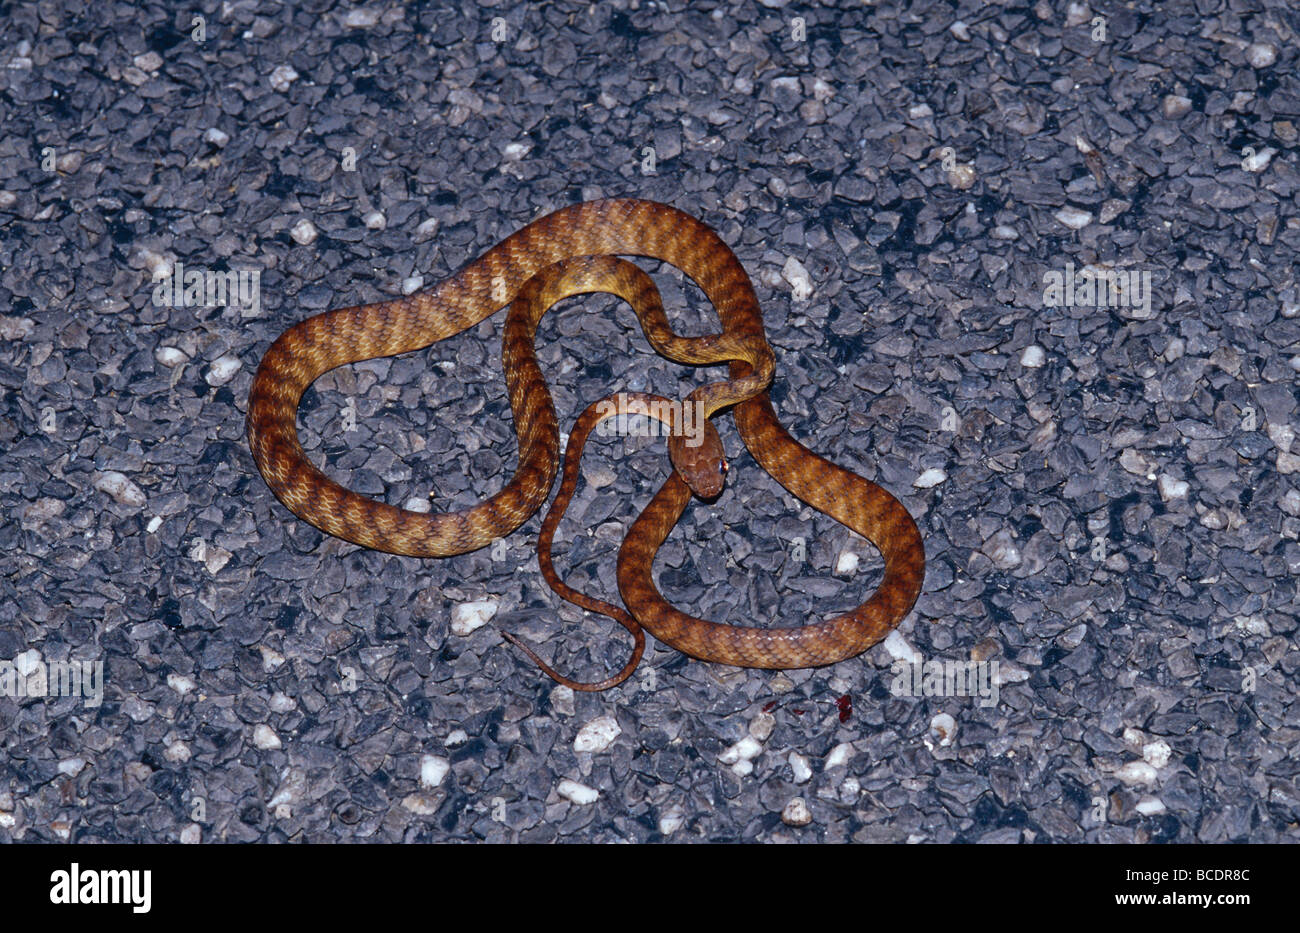 A Brown Tree Snake Boiga irregularis, resting on a warm road at night. Stock Photo